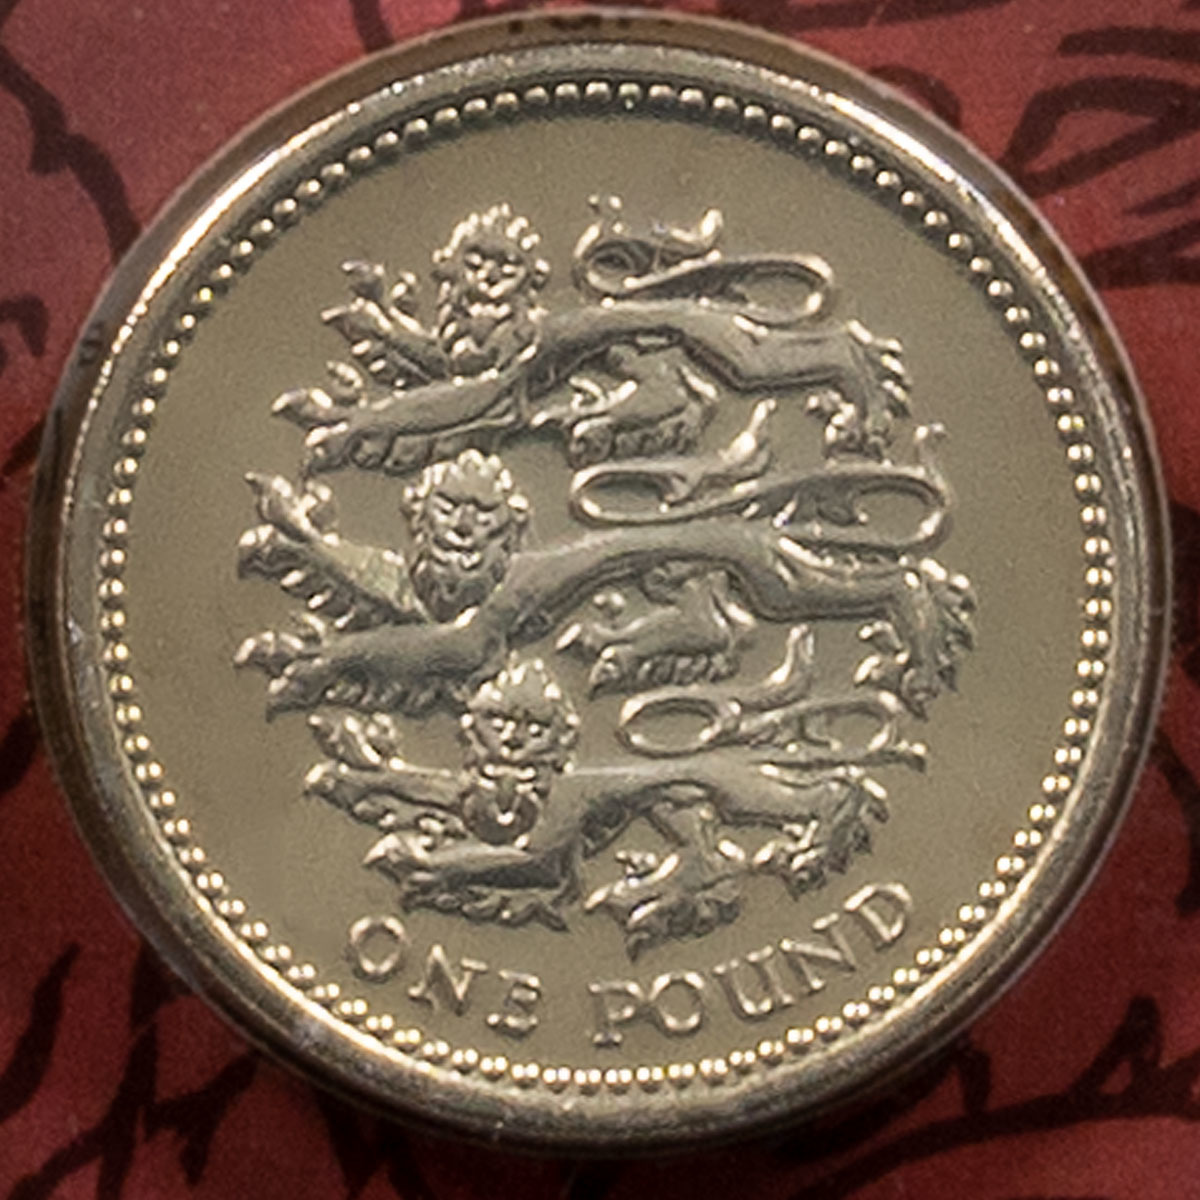 1997-bu-£1-coin-for-england-002-m